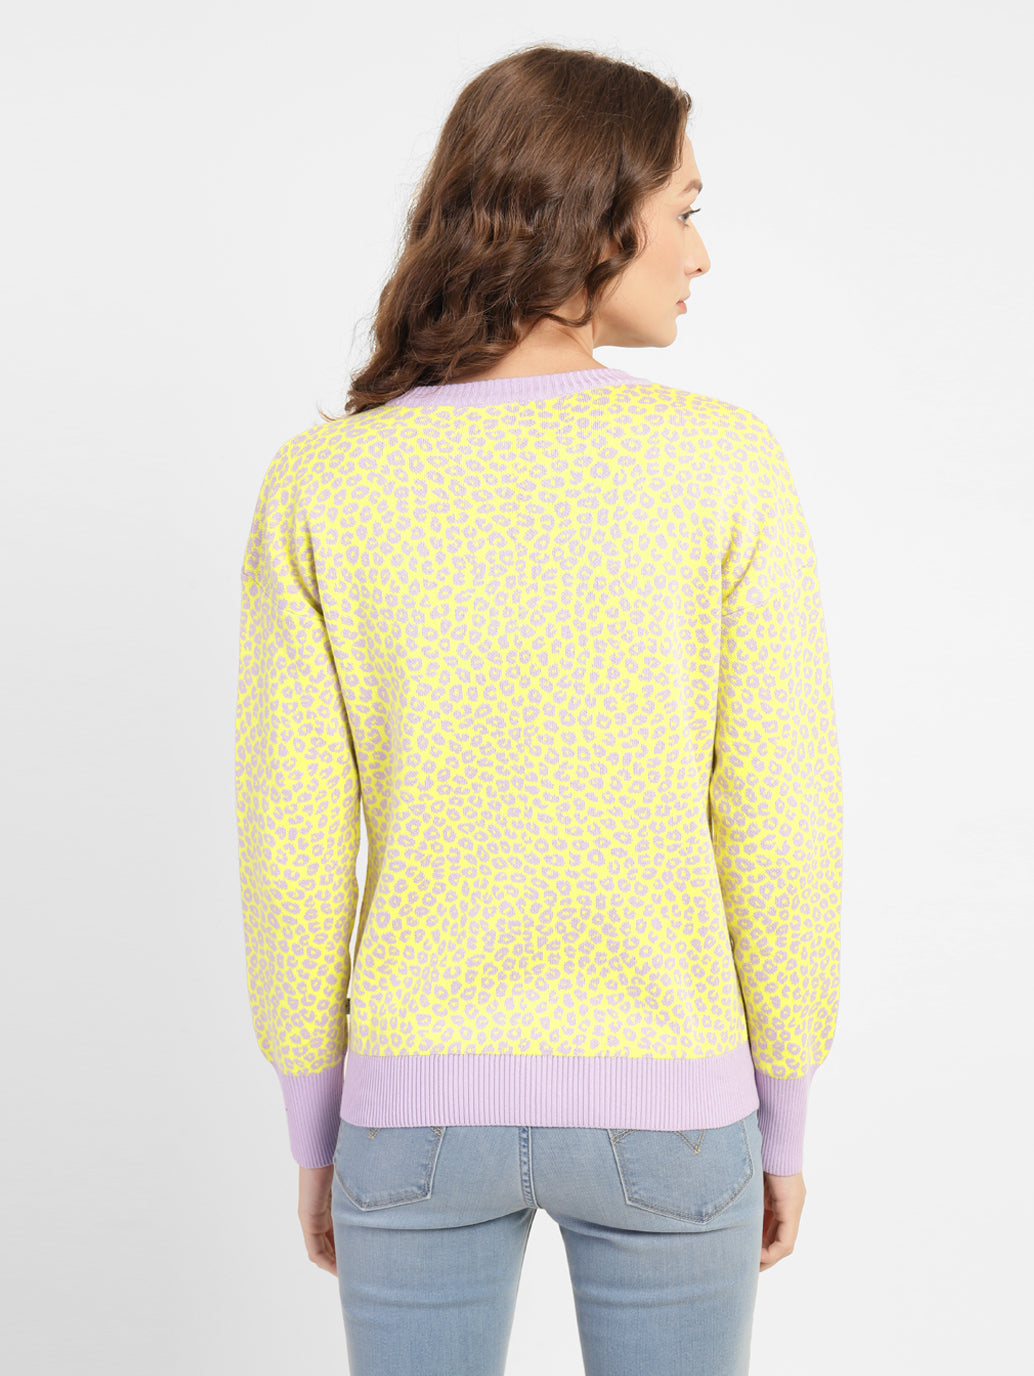 Women's Printed Crew Neck Sweater